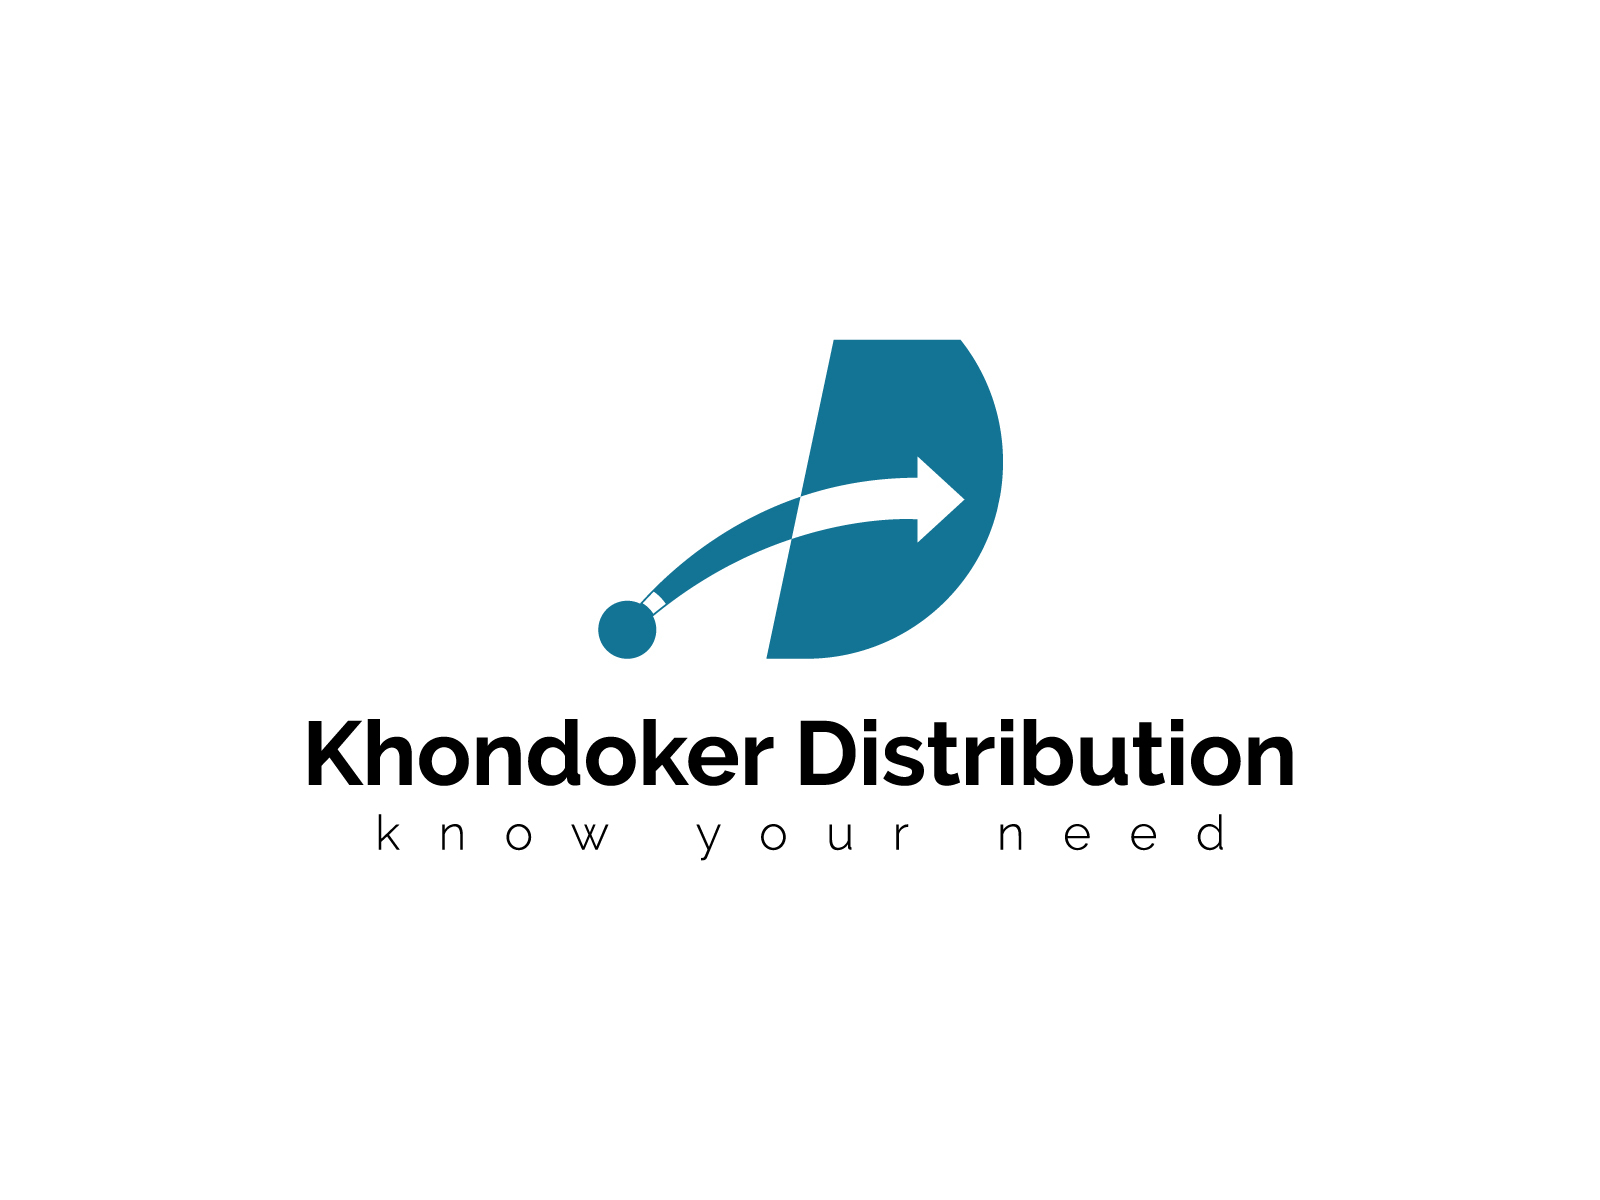 distribution-logo-by-md-shahin-ahmed-raju-on-dribbble